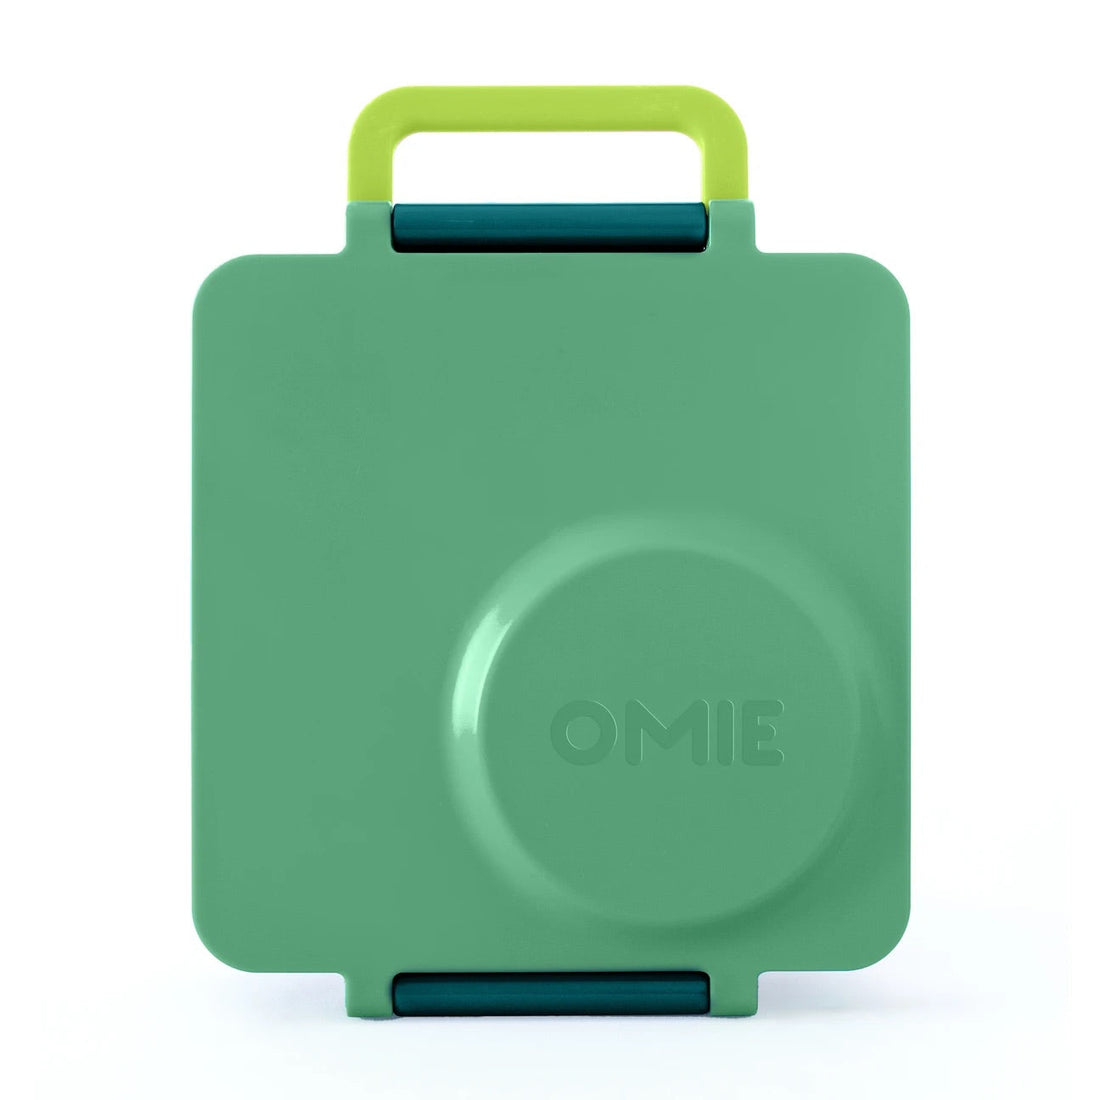 Lonchera Térmica Omiebox Bento Box con Aislamiento Térmico Verde